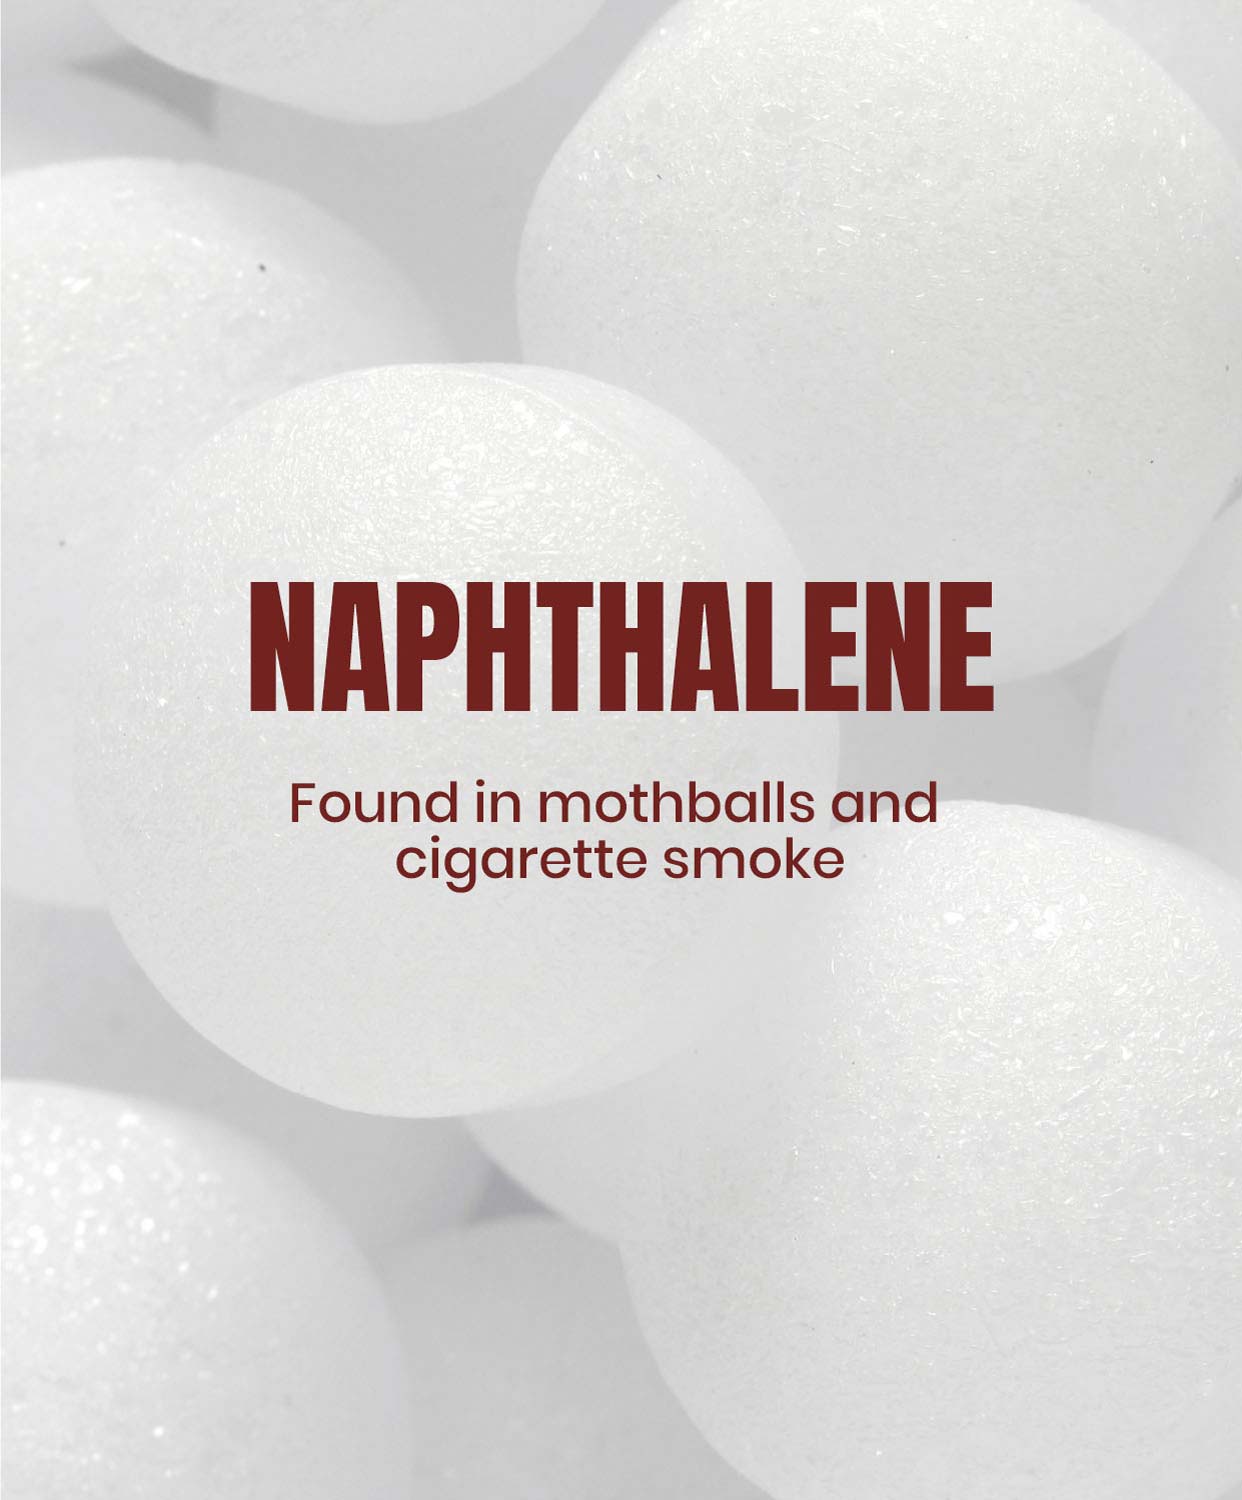 Naphthalene. Found in mothballs and cigarette smoke.